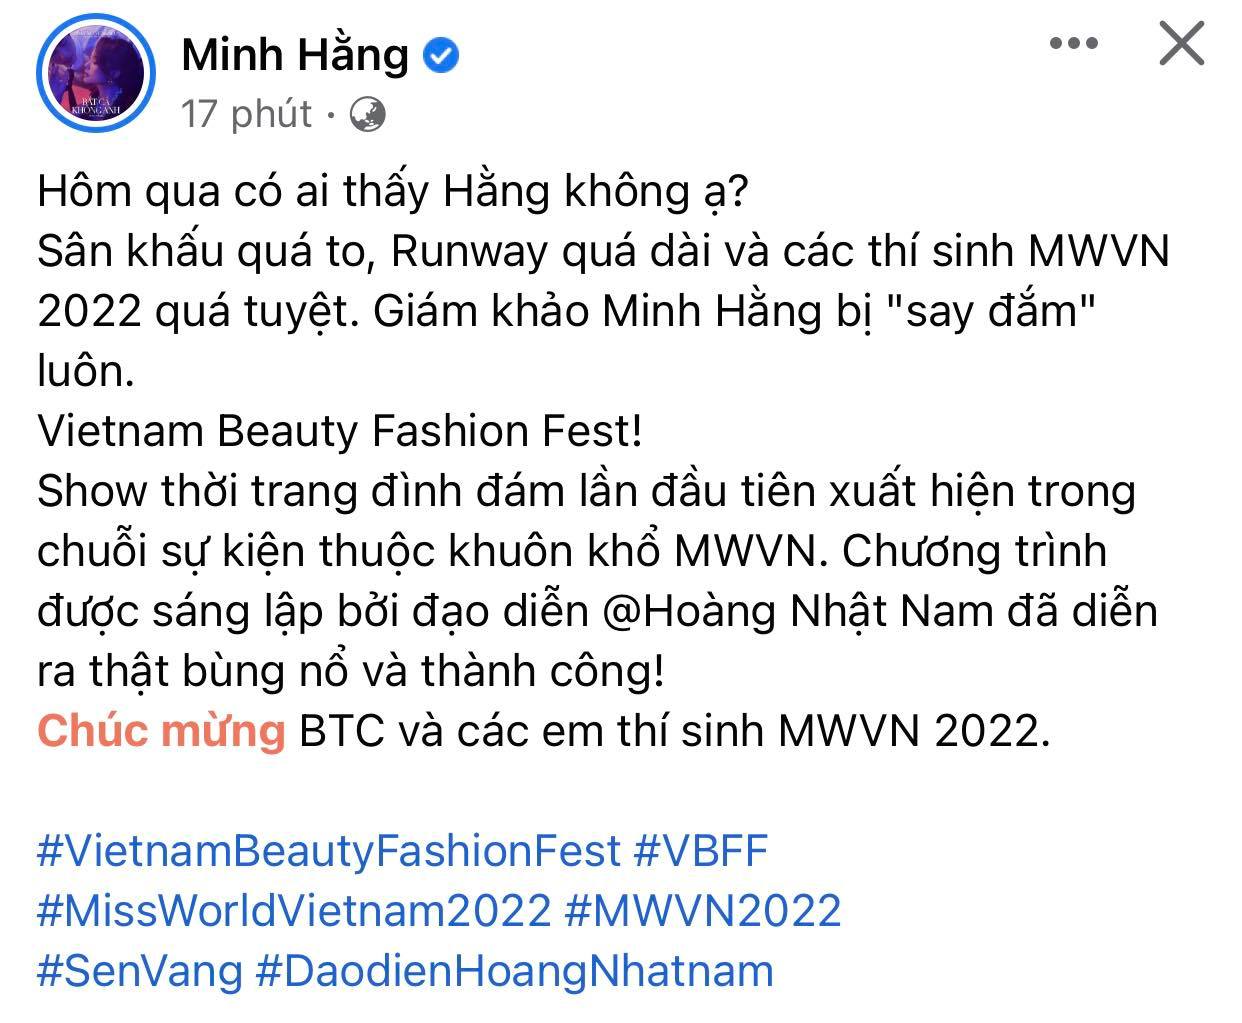 Minh-hang-o-miss-word-vn-2022-dien-vay-khoet-sau-khoe-vong-1-khung-lo-nhan-sac-that-gay-ngo-ngang-1